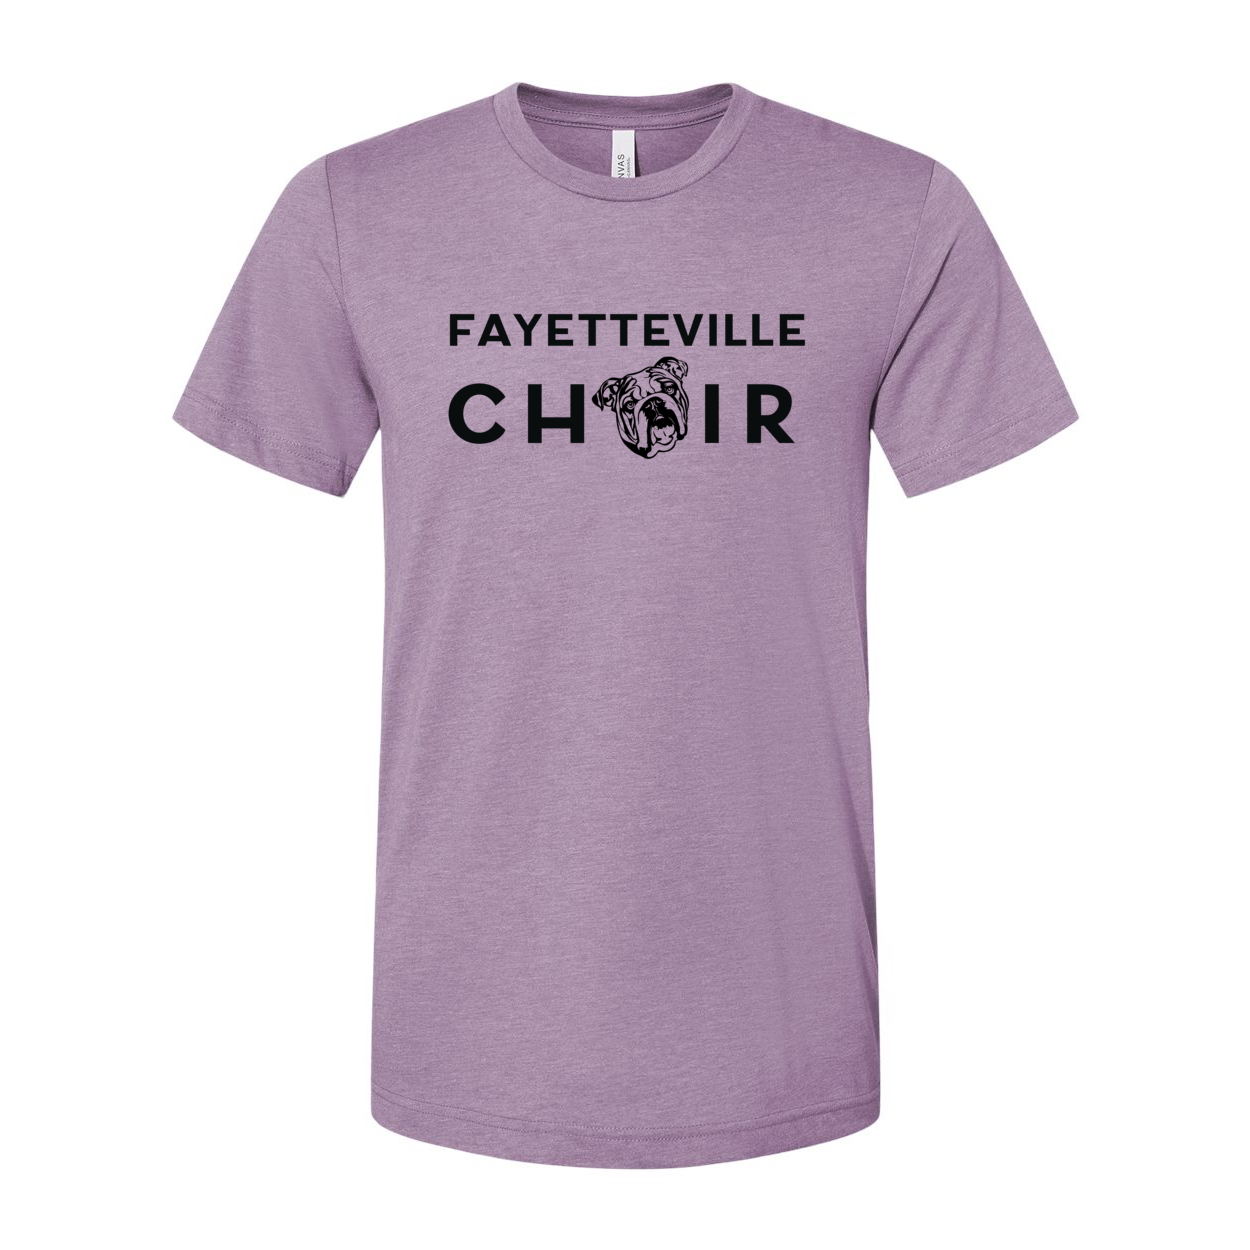 Fayetteville Choir Tee #6